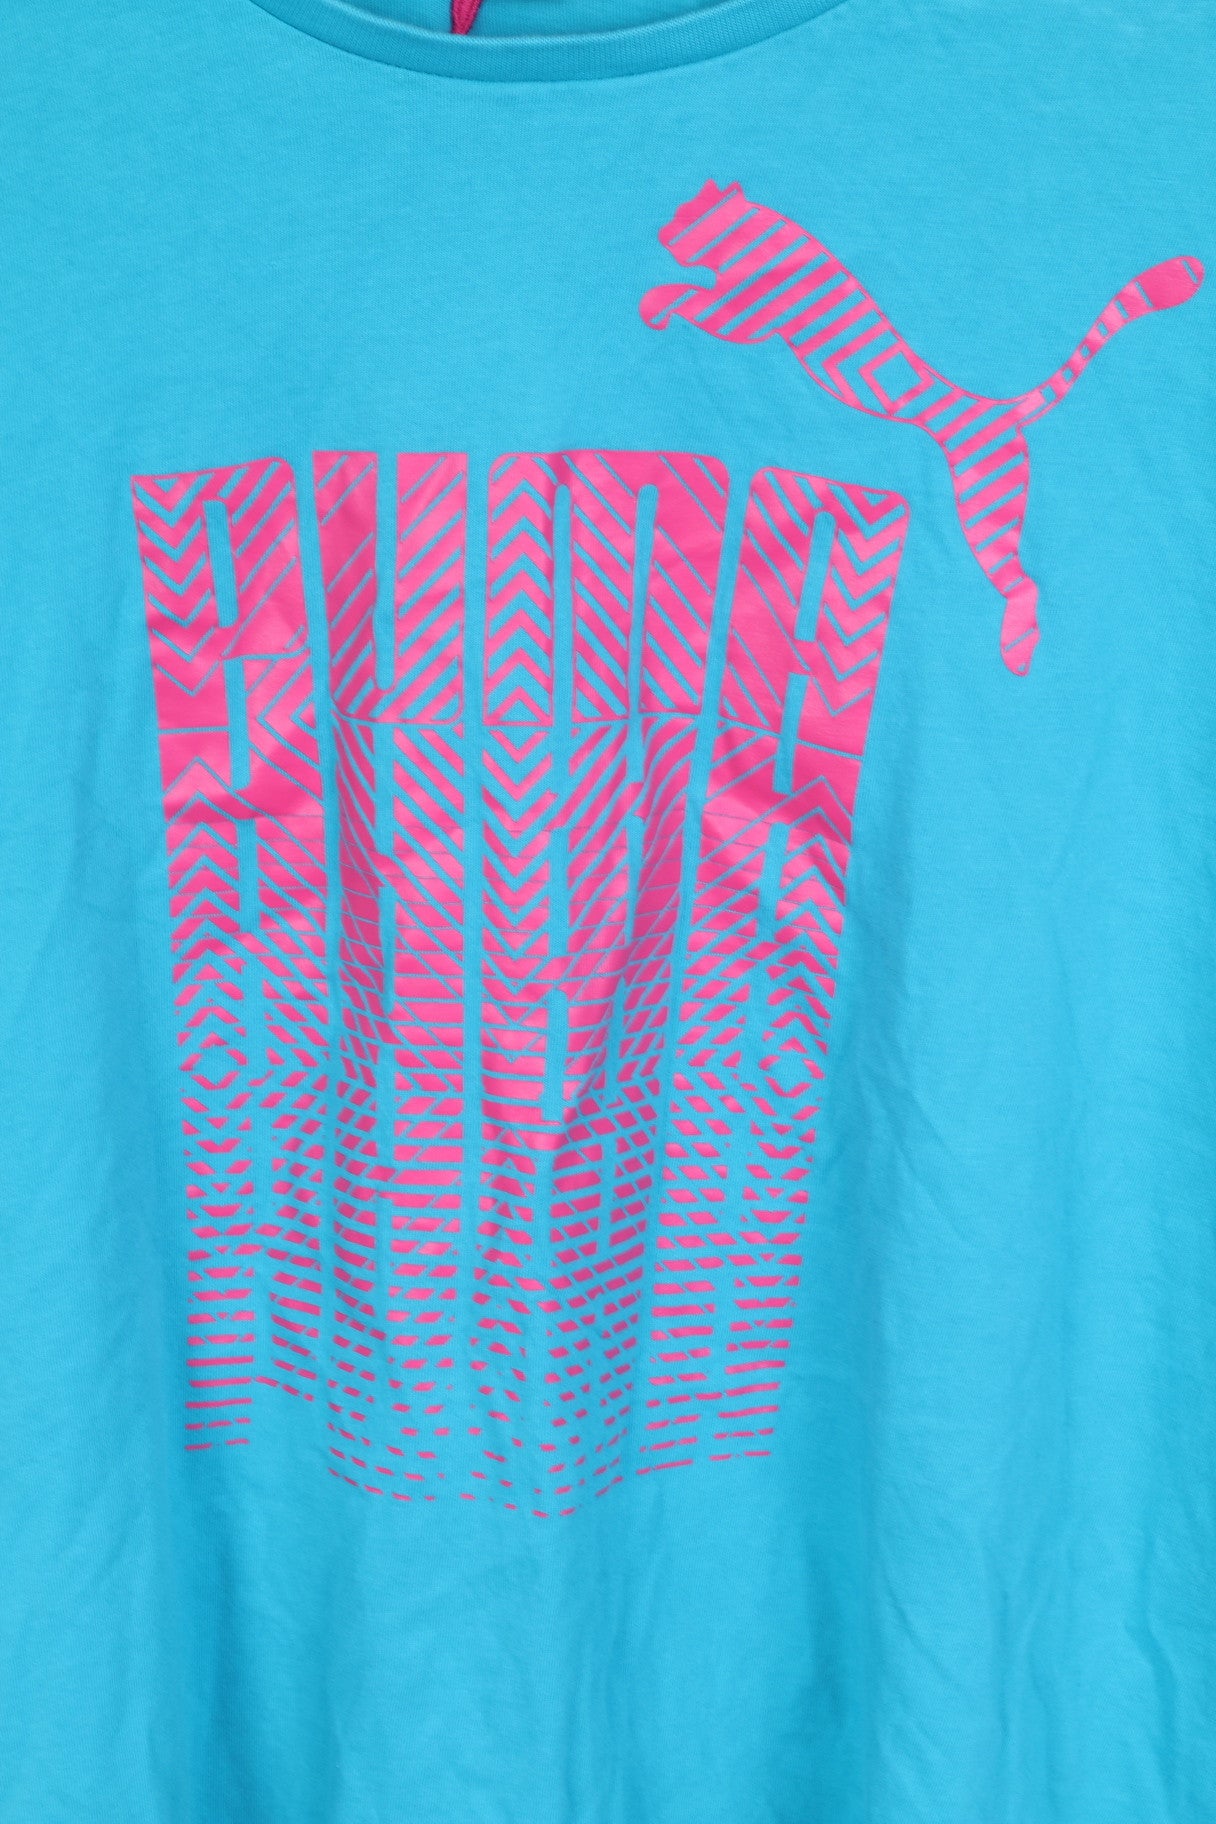 T-shirt Puma da uomo XL Sportswear girocollo in cotone turchese rosa